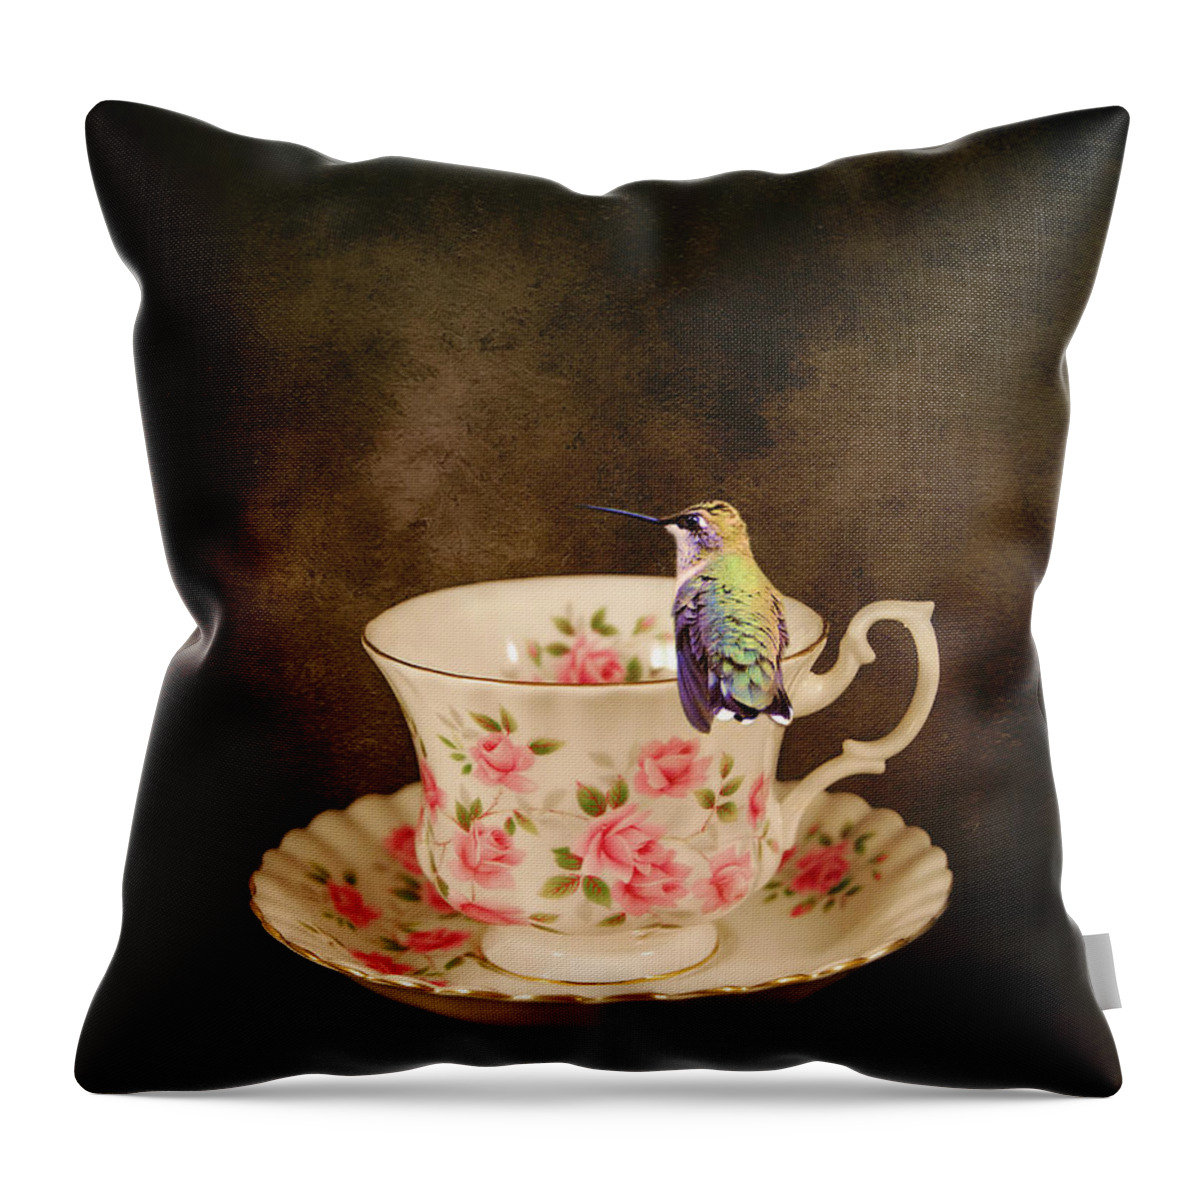 Hummingbird Throw Pillow featuring the photograph Tea Time With a Hummingbird by Jai Johnson